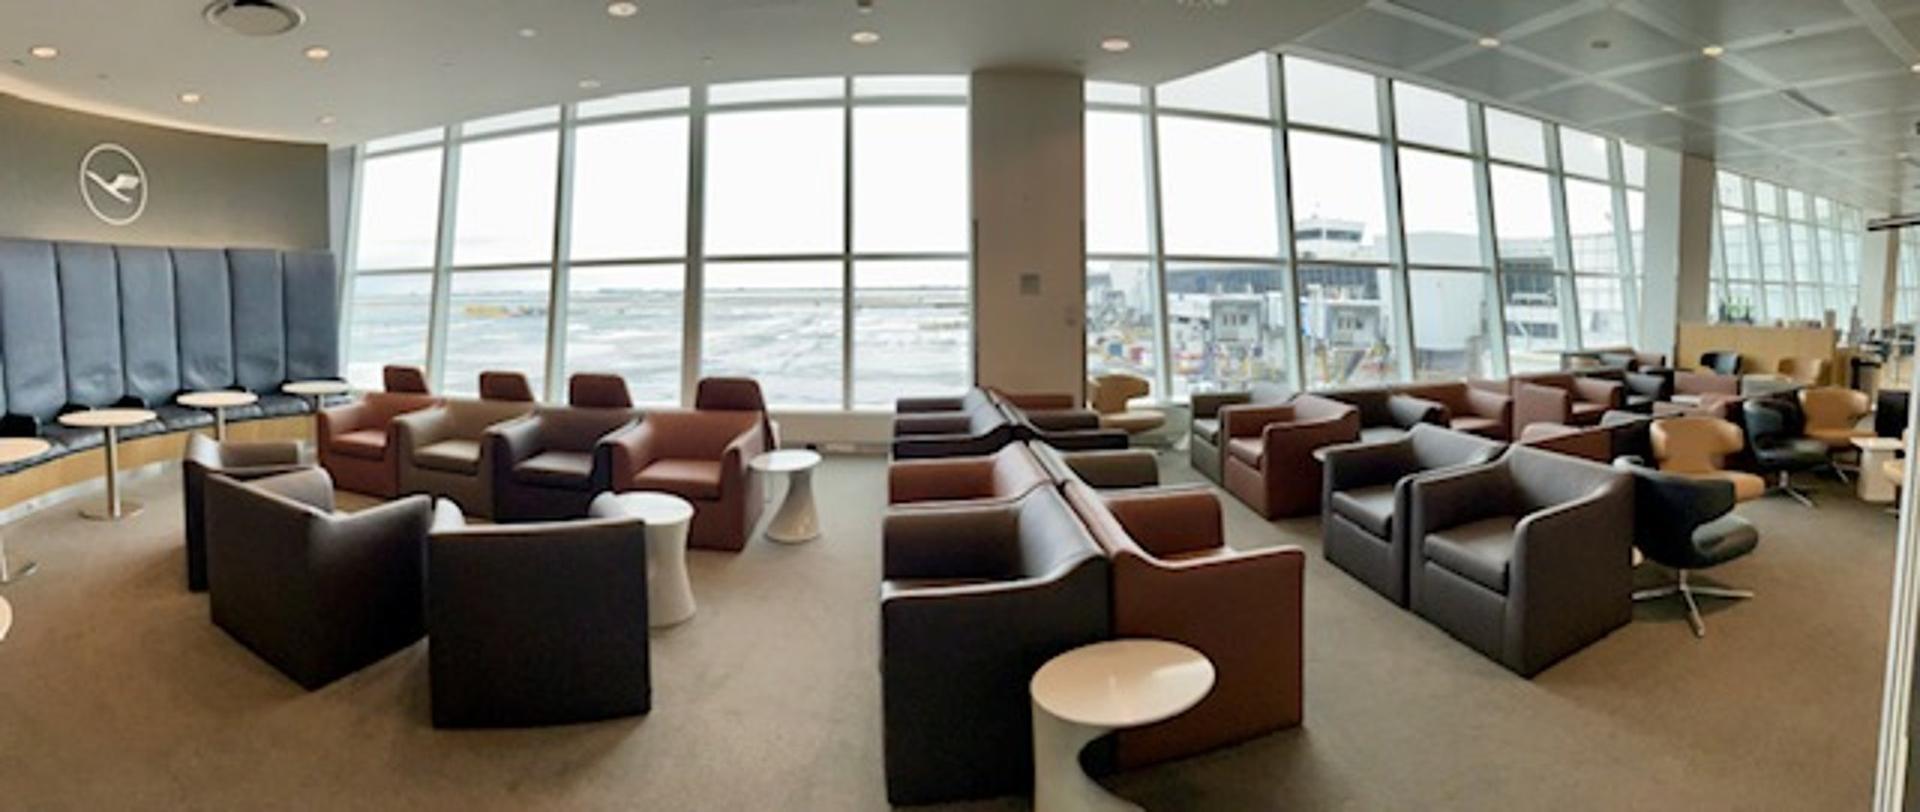 Lufthansa Business Lounge image 9 of 39